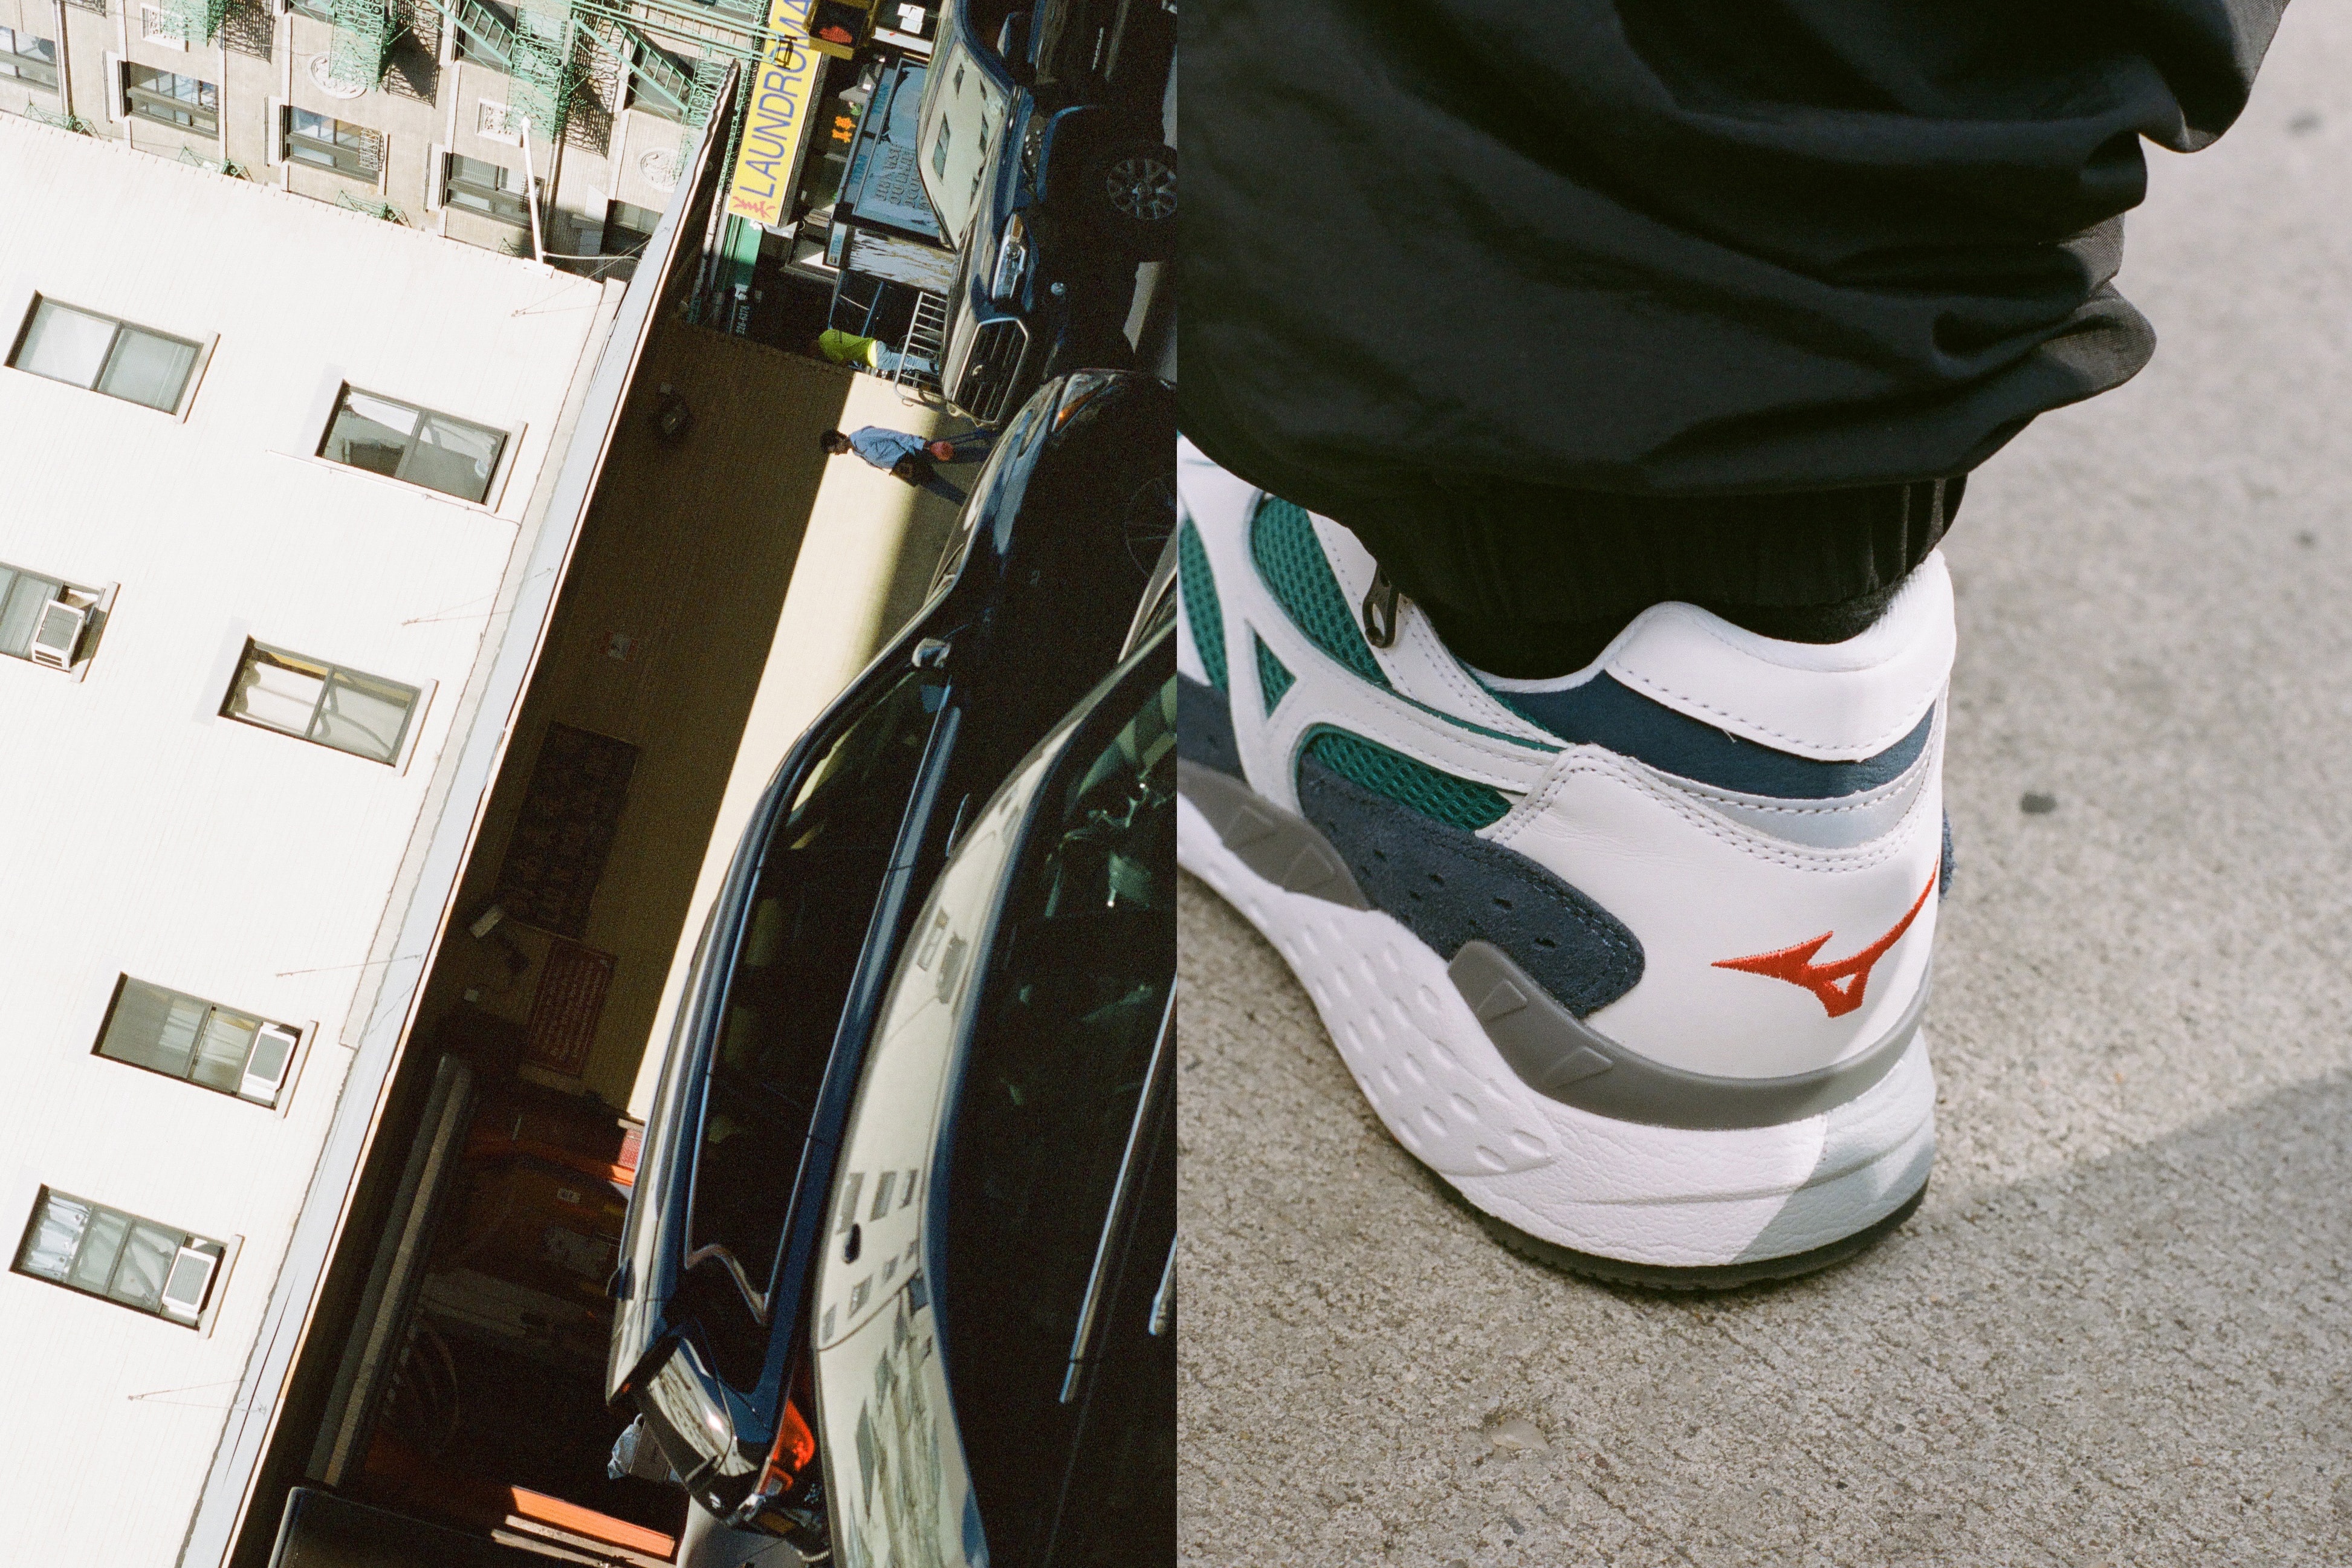 Mizuno mondo control og patta buy cop purchase release information 1990s japanese running sneaker amsterdam milan london colorway